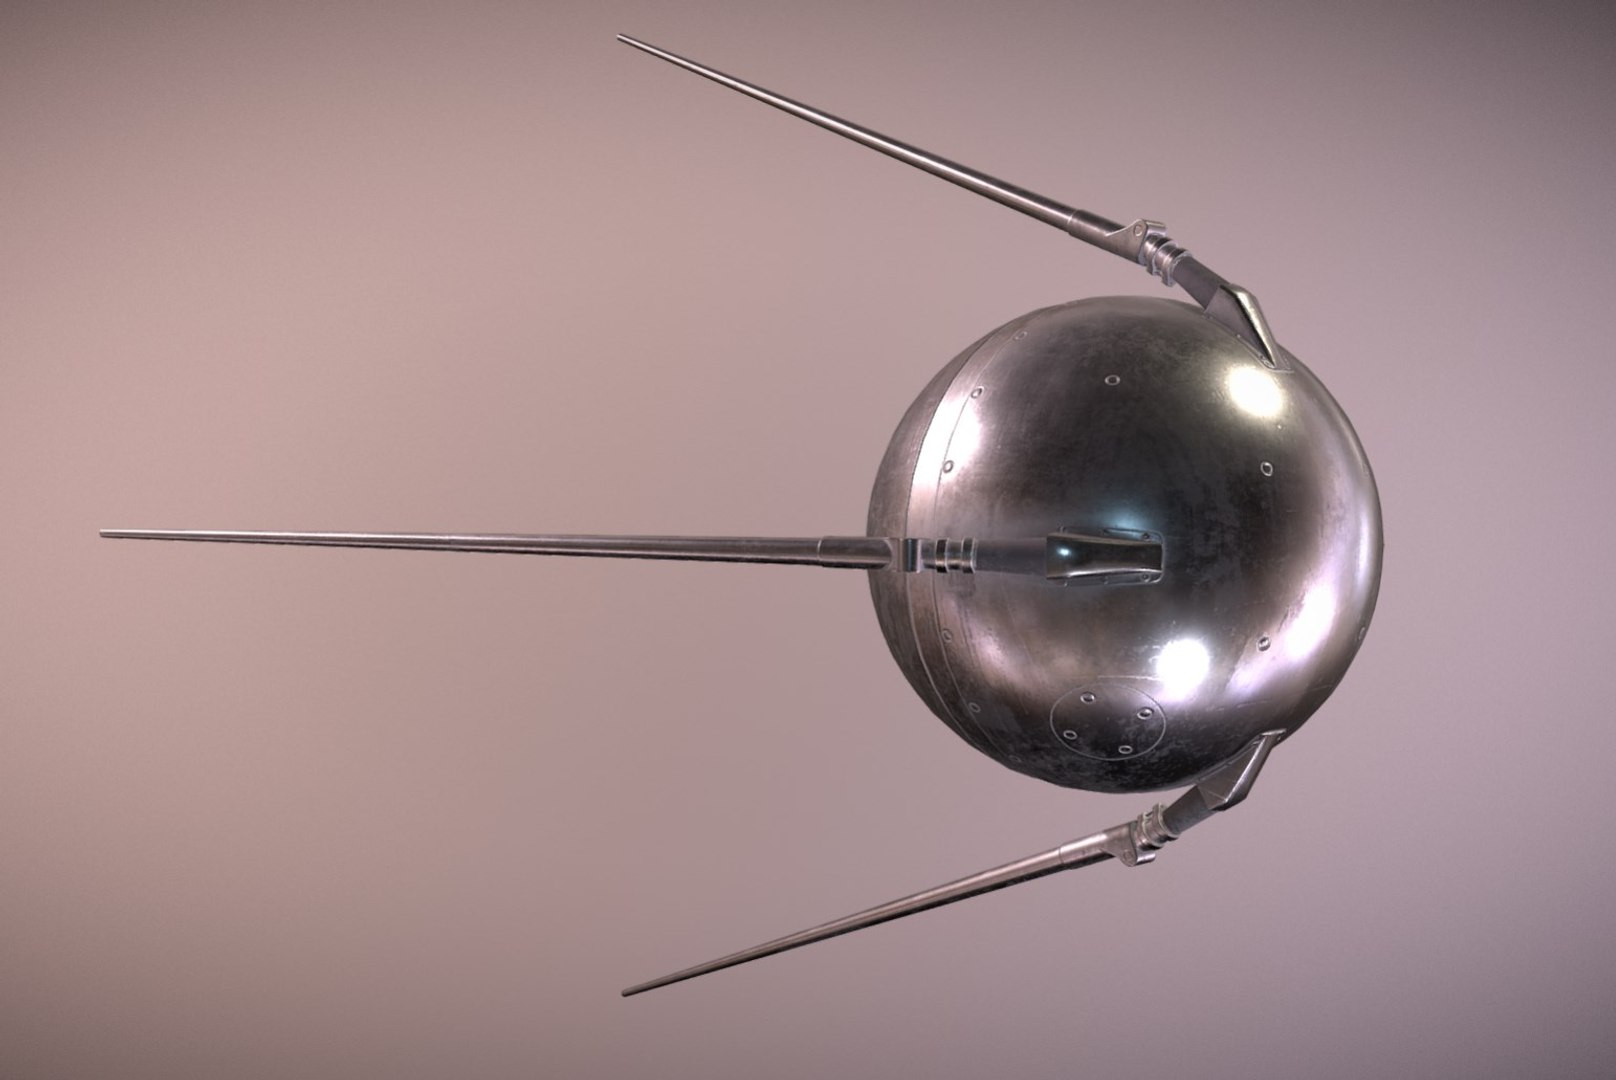 Первого спутника 15. Спутник земли ПС-1. Спутник-1 искусственный Спутник. Искусственный Спутник земли Спутник-1. Первый искусственный Спутник 1957 г.